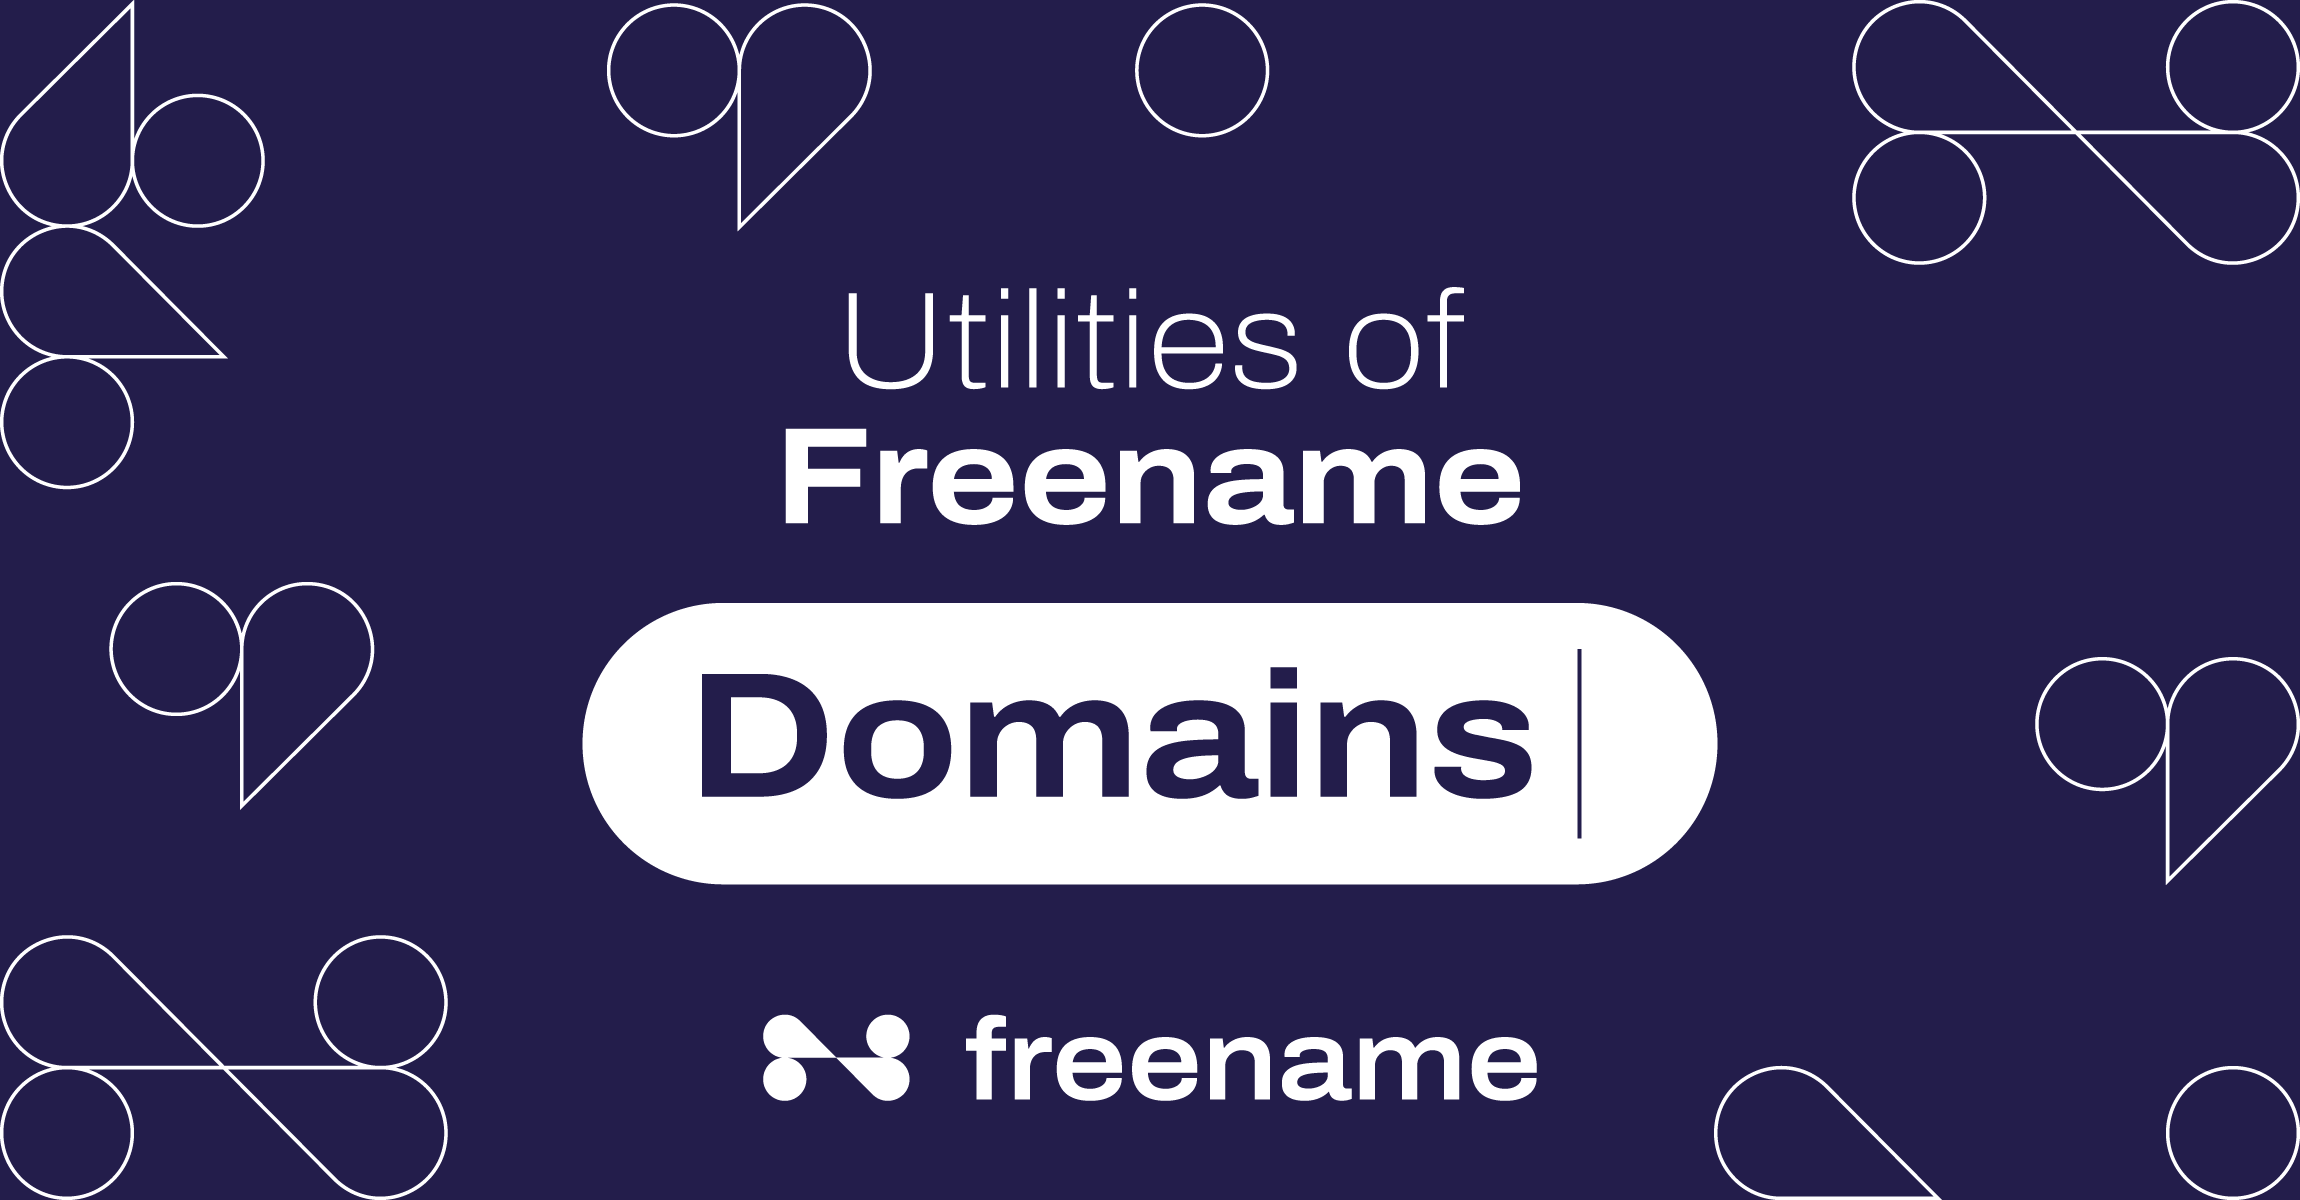 Utilities of Freename Domains